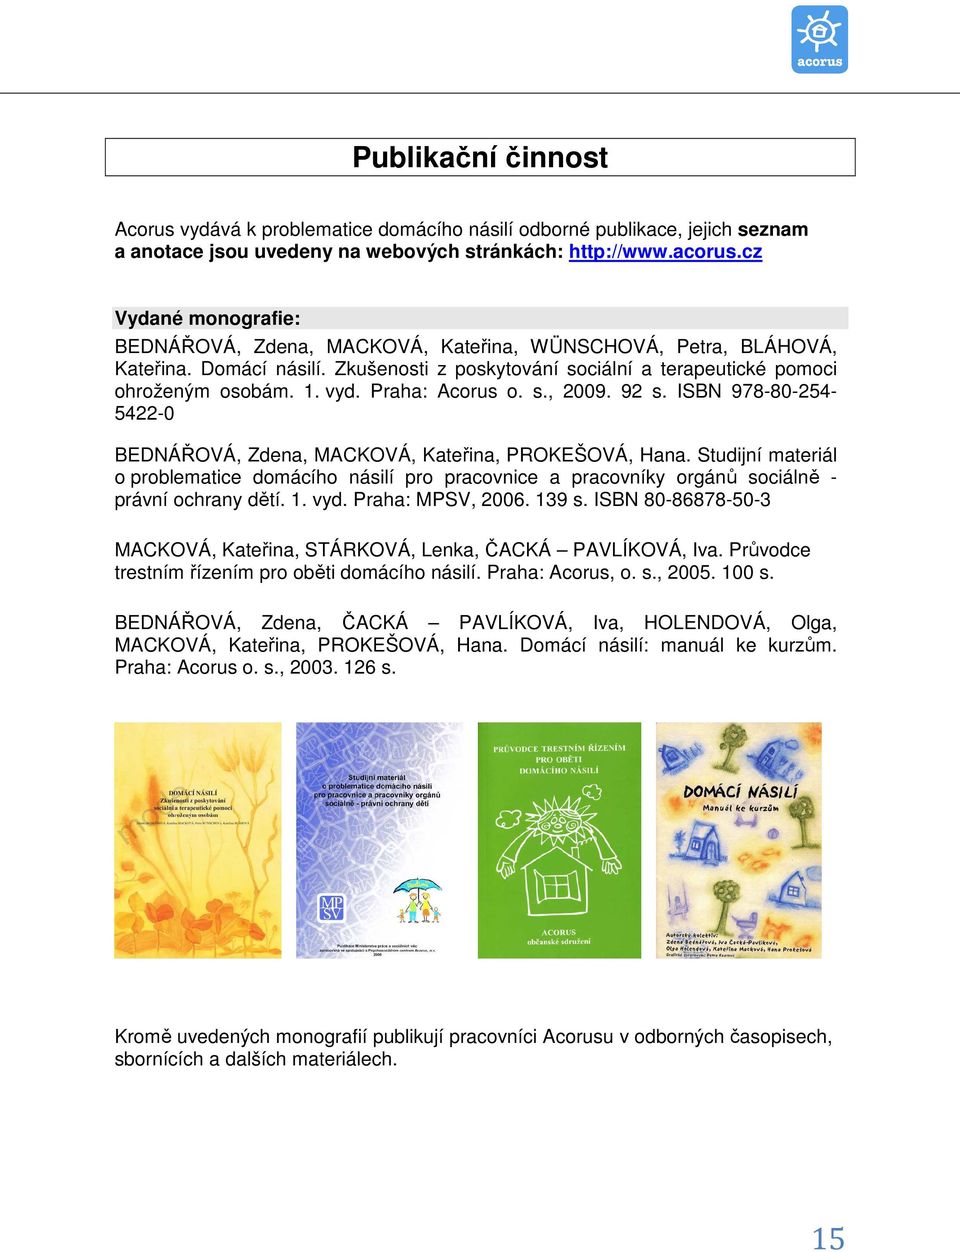 Praha: Acorus o. s., 2009. 92 s. ISBN 978-80-254-5422-0 BEDNÁŘOVÁ, Zdena, MACKOVÁ, Kateřina, PROKEŠOVÁ, Hana.